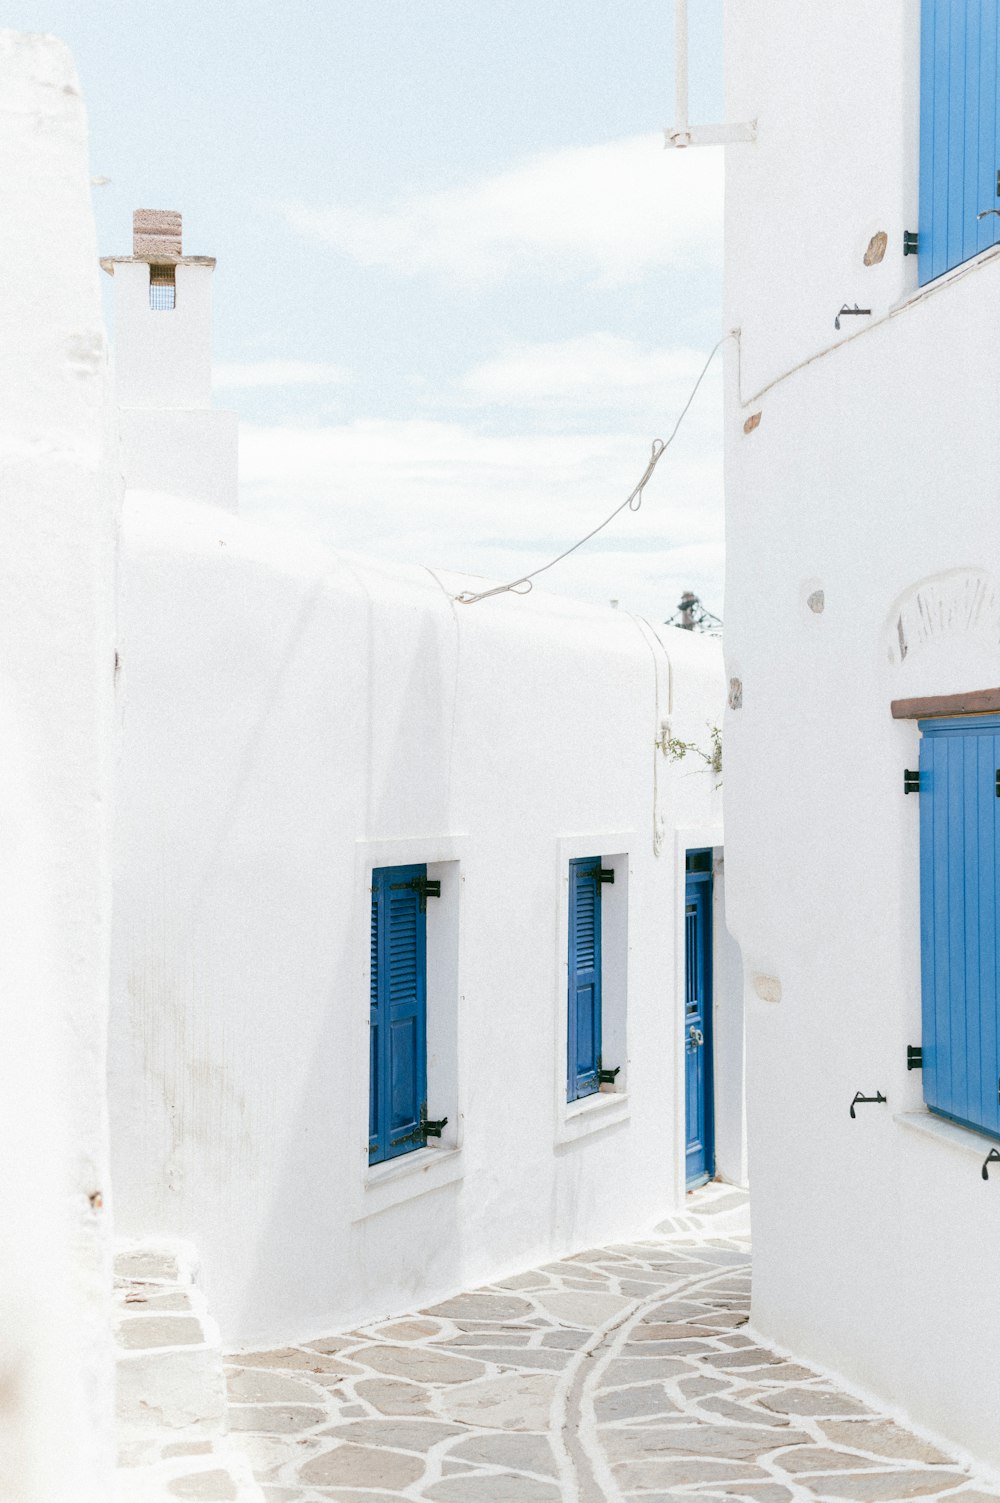 Un edificio blanco con puertas azules